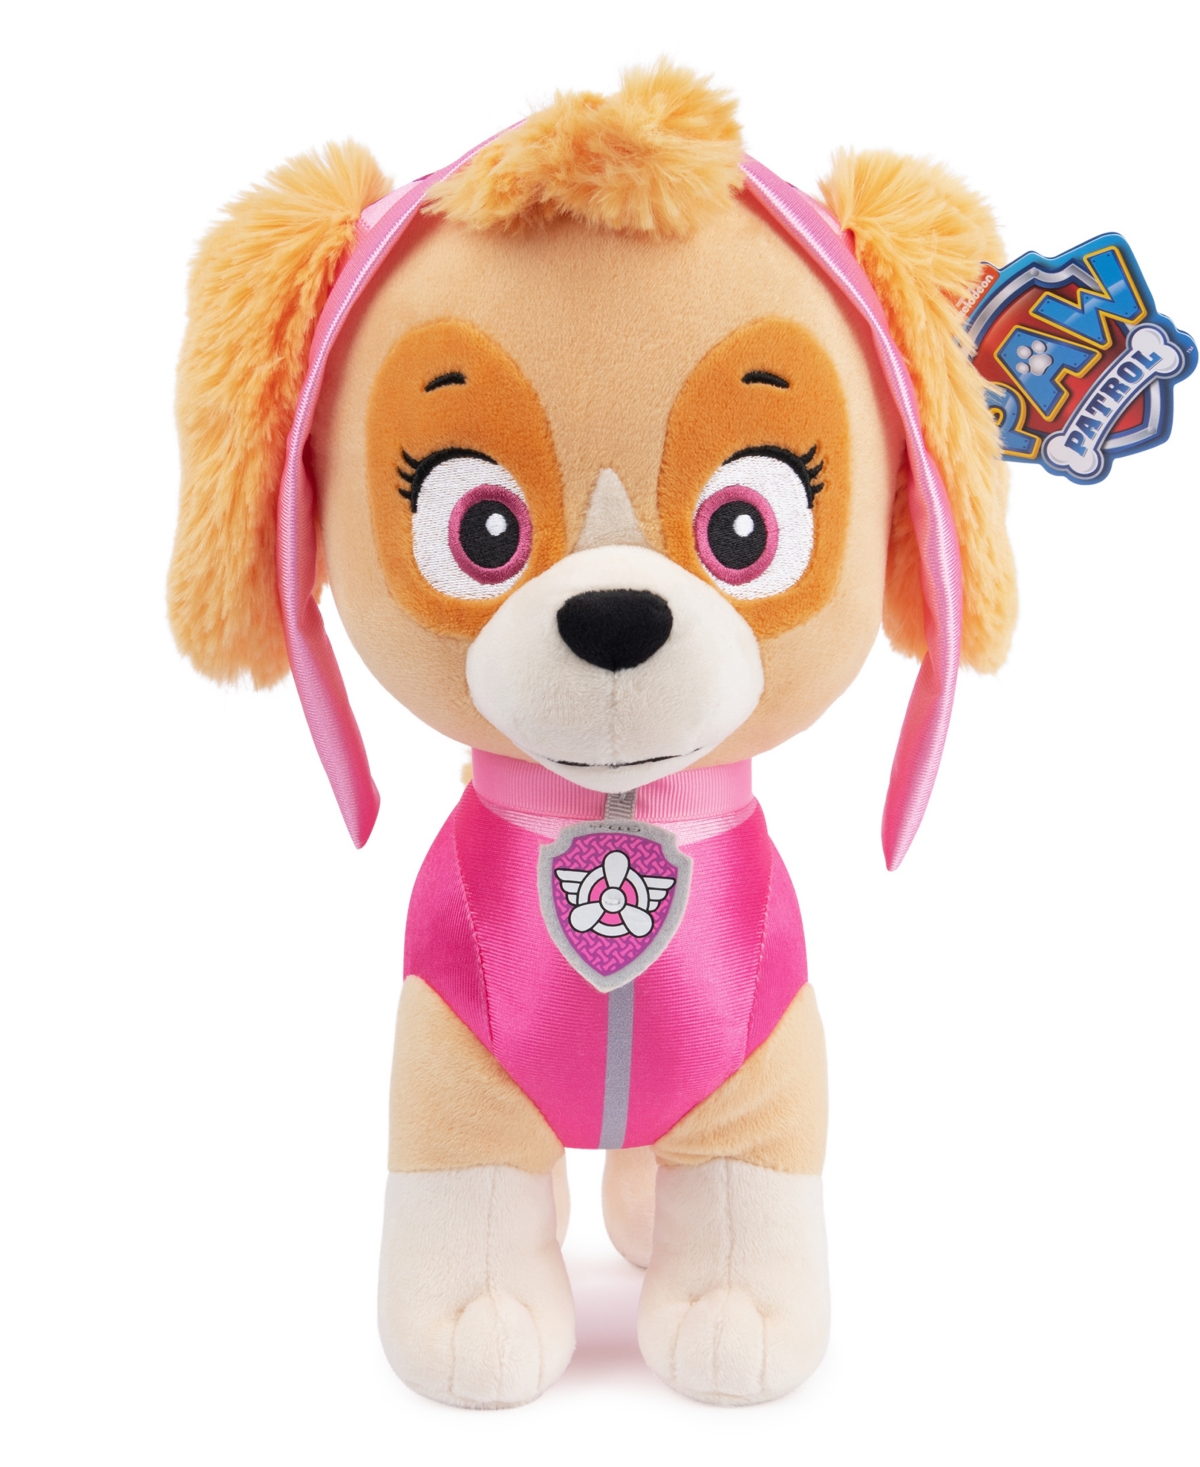 Paw Patrol Kids' Skye In Heroic Standing Position Premium Stuffed Animal Plush Toy In Multi-color